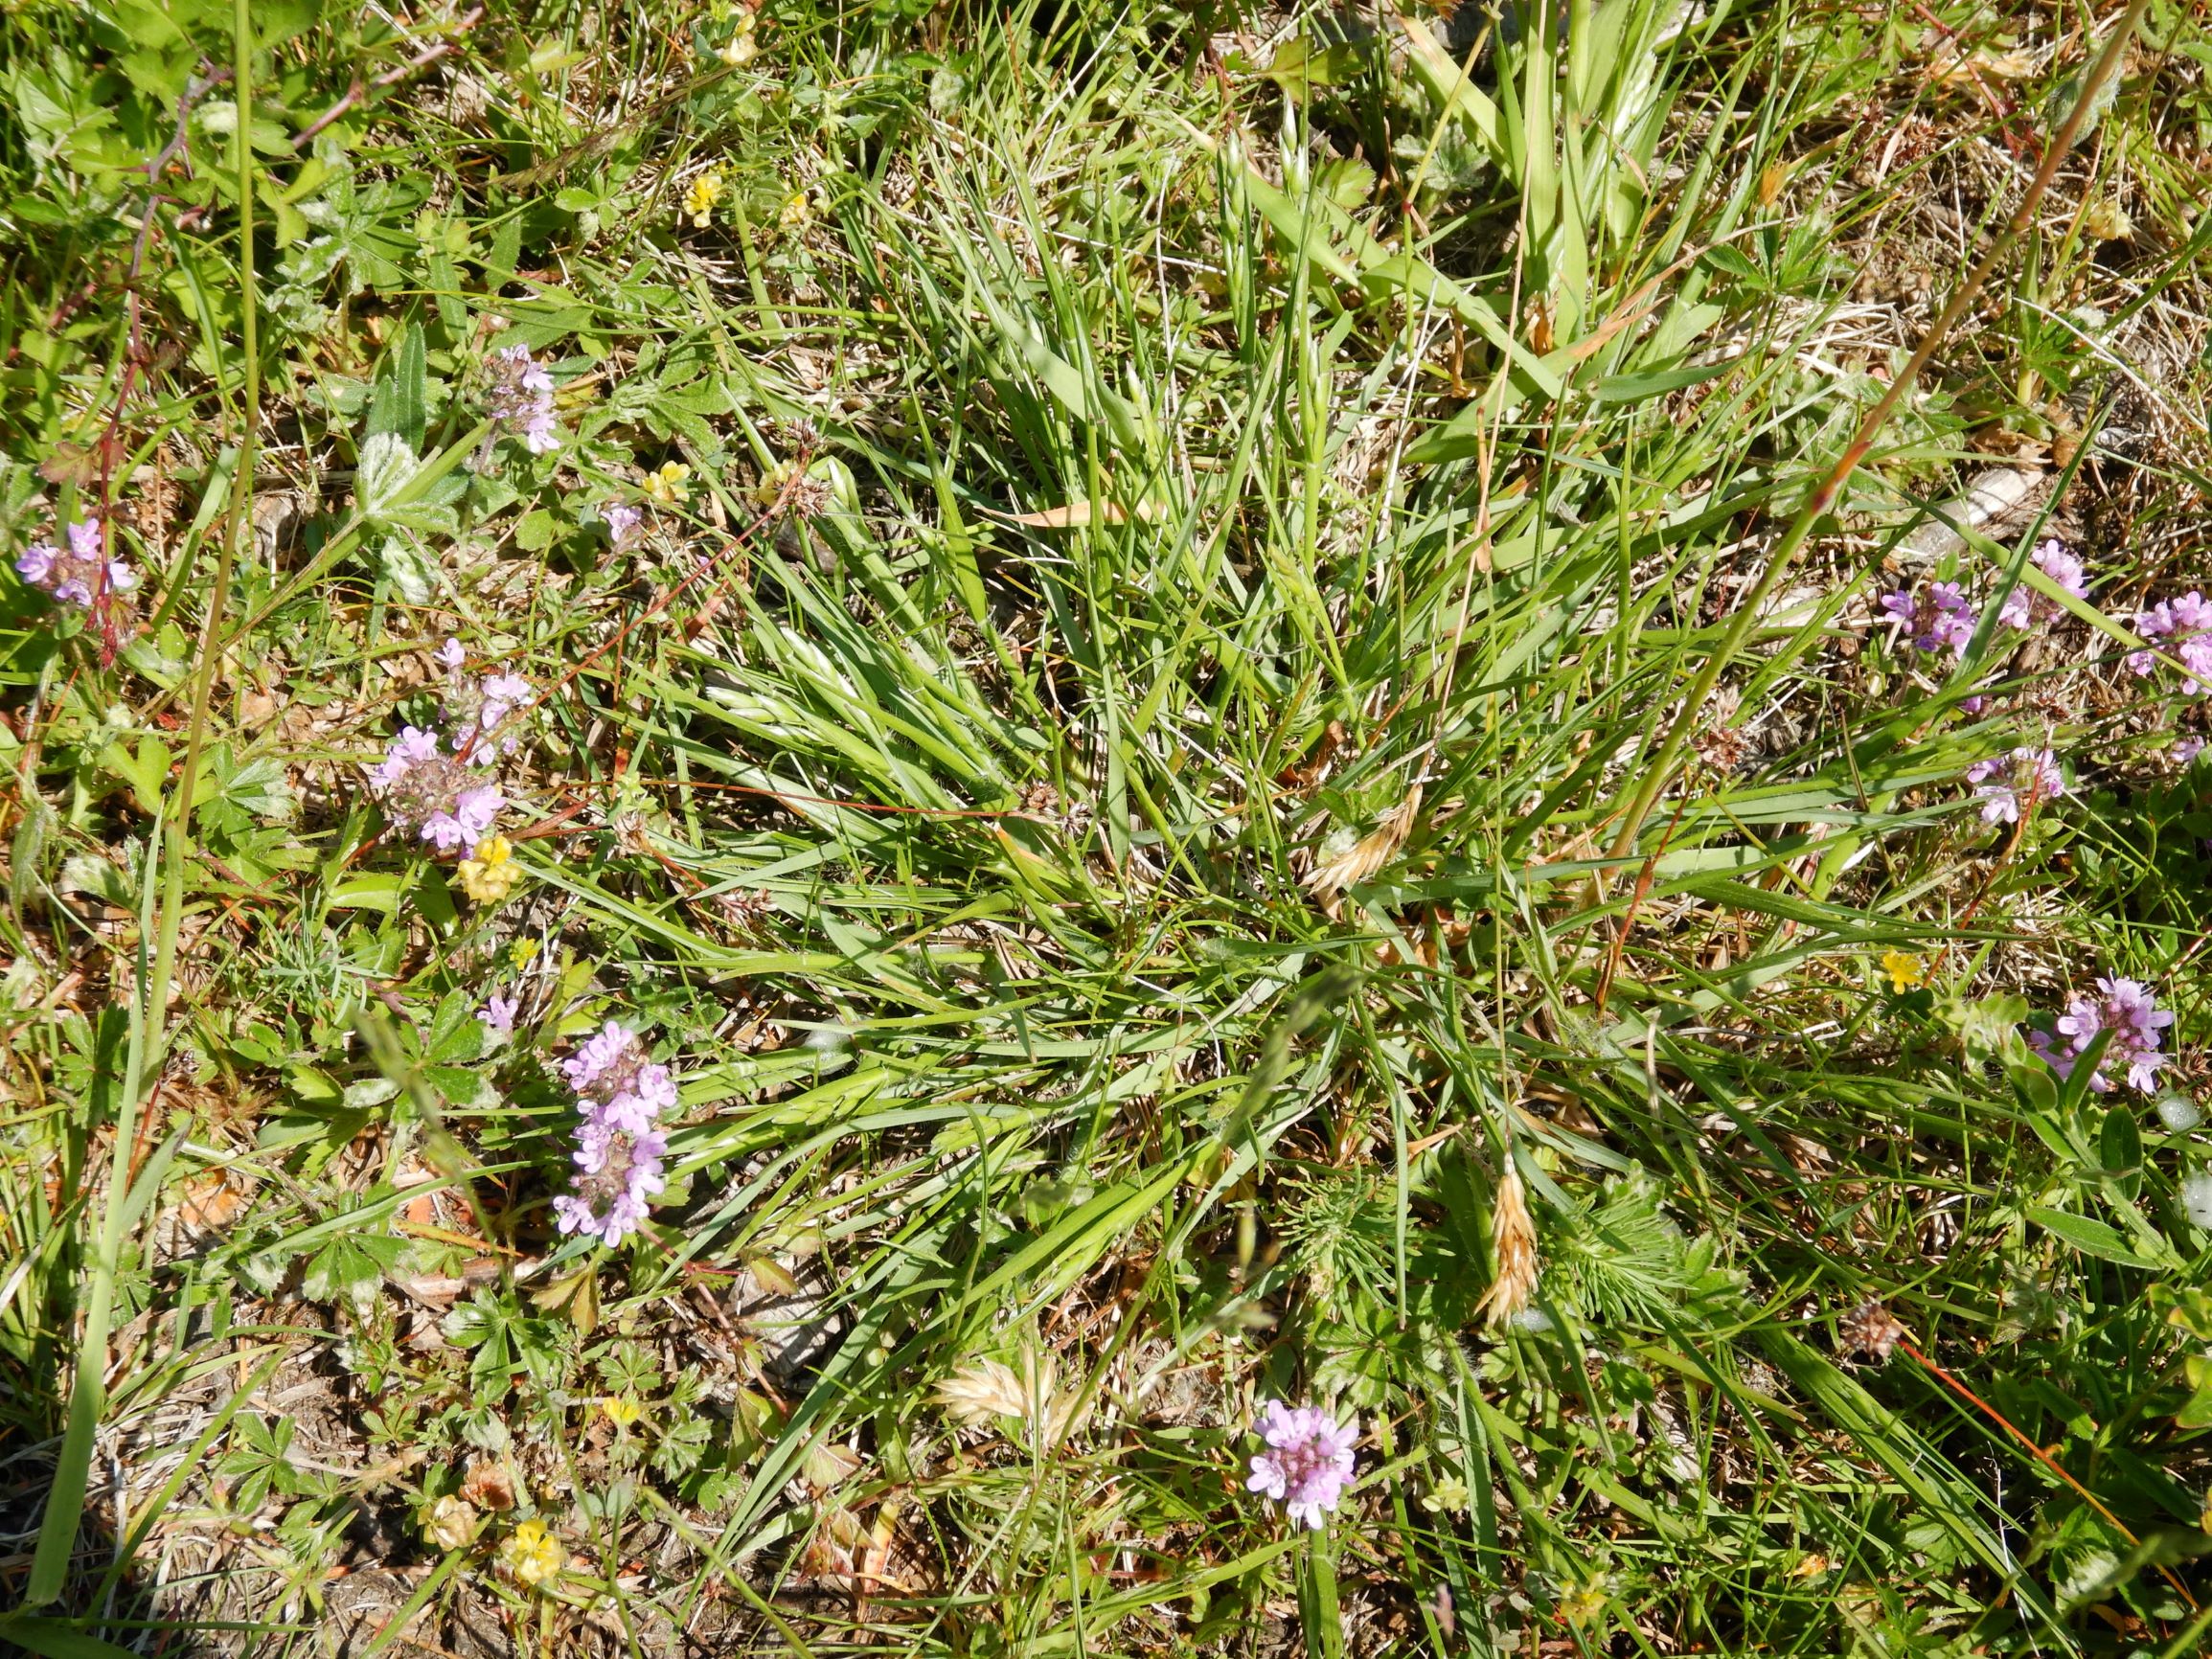 DSCN6898 leithagebirge breitenbrunn, hoadl, 2002-06-05, danthonia decumbens, thymus pannonicus agg., potentilla verna agg. etc.JPG